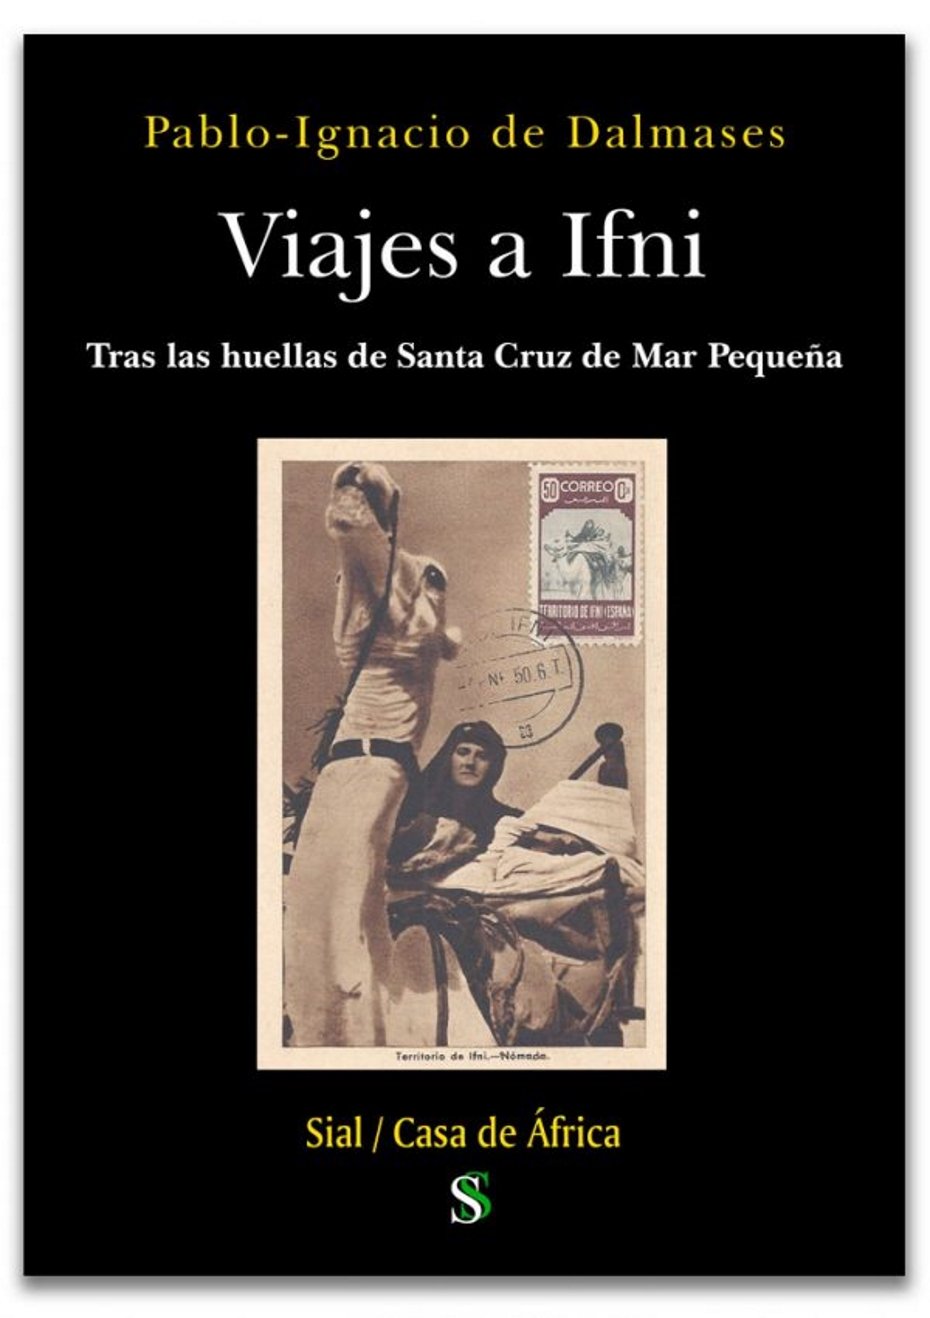 Pablo-Ignacio de Dalmases, 'Viajes a Ifni'. Sial, 344 pp., 23 €.